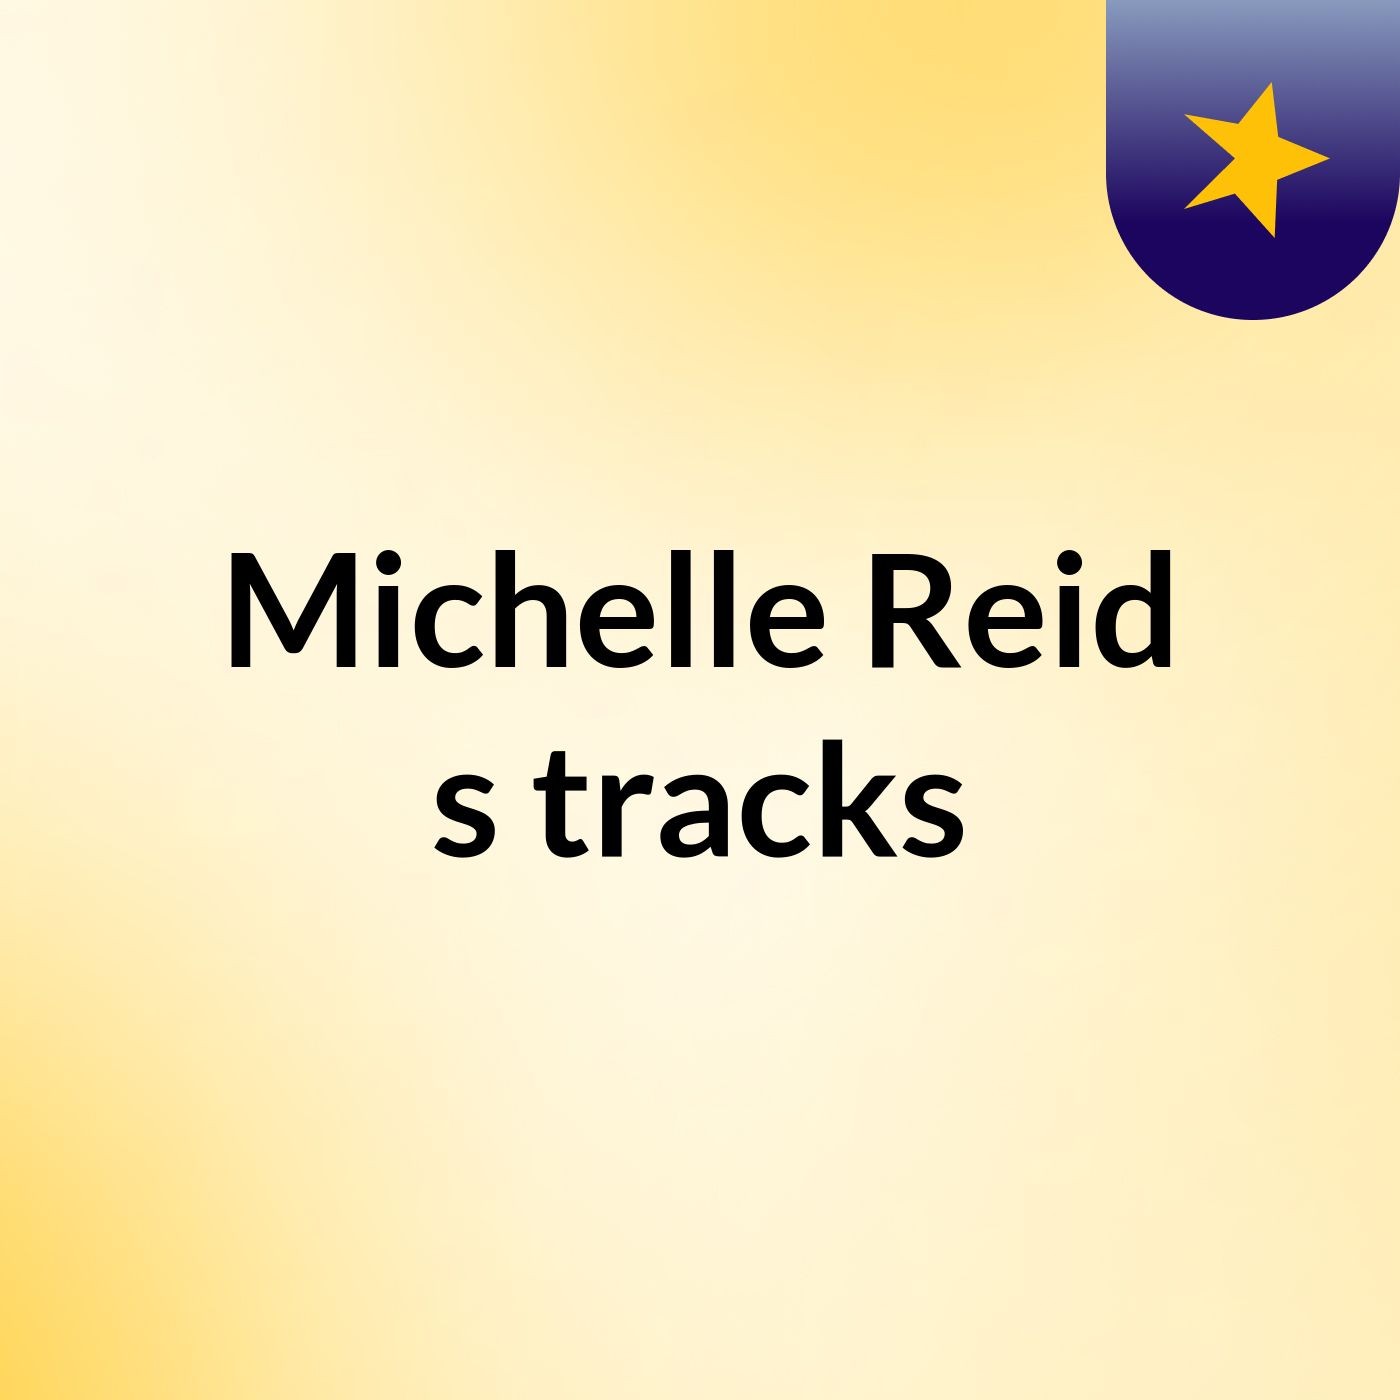 Michelle Reid's tracks